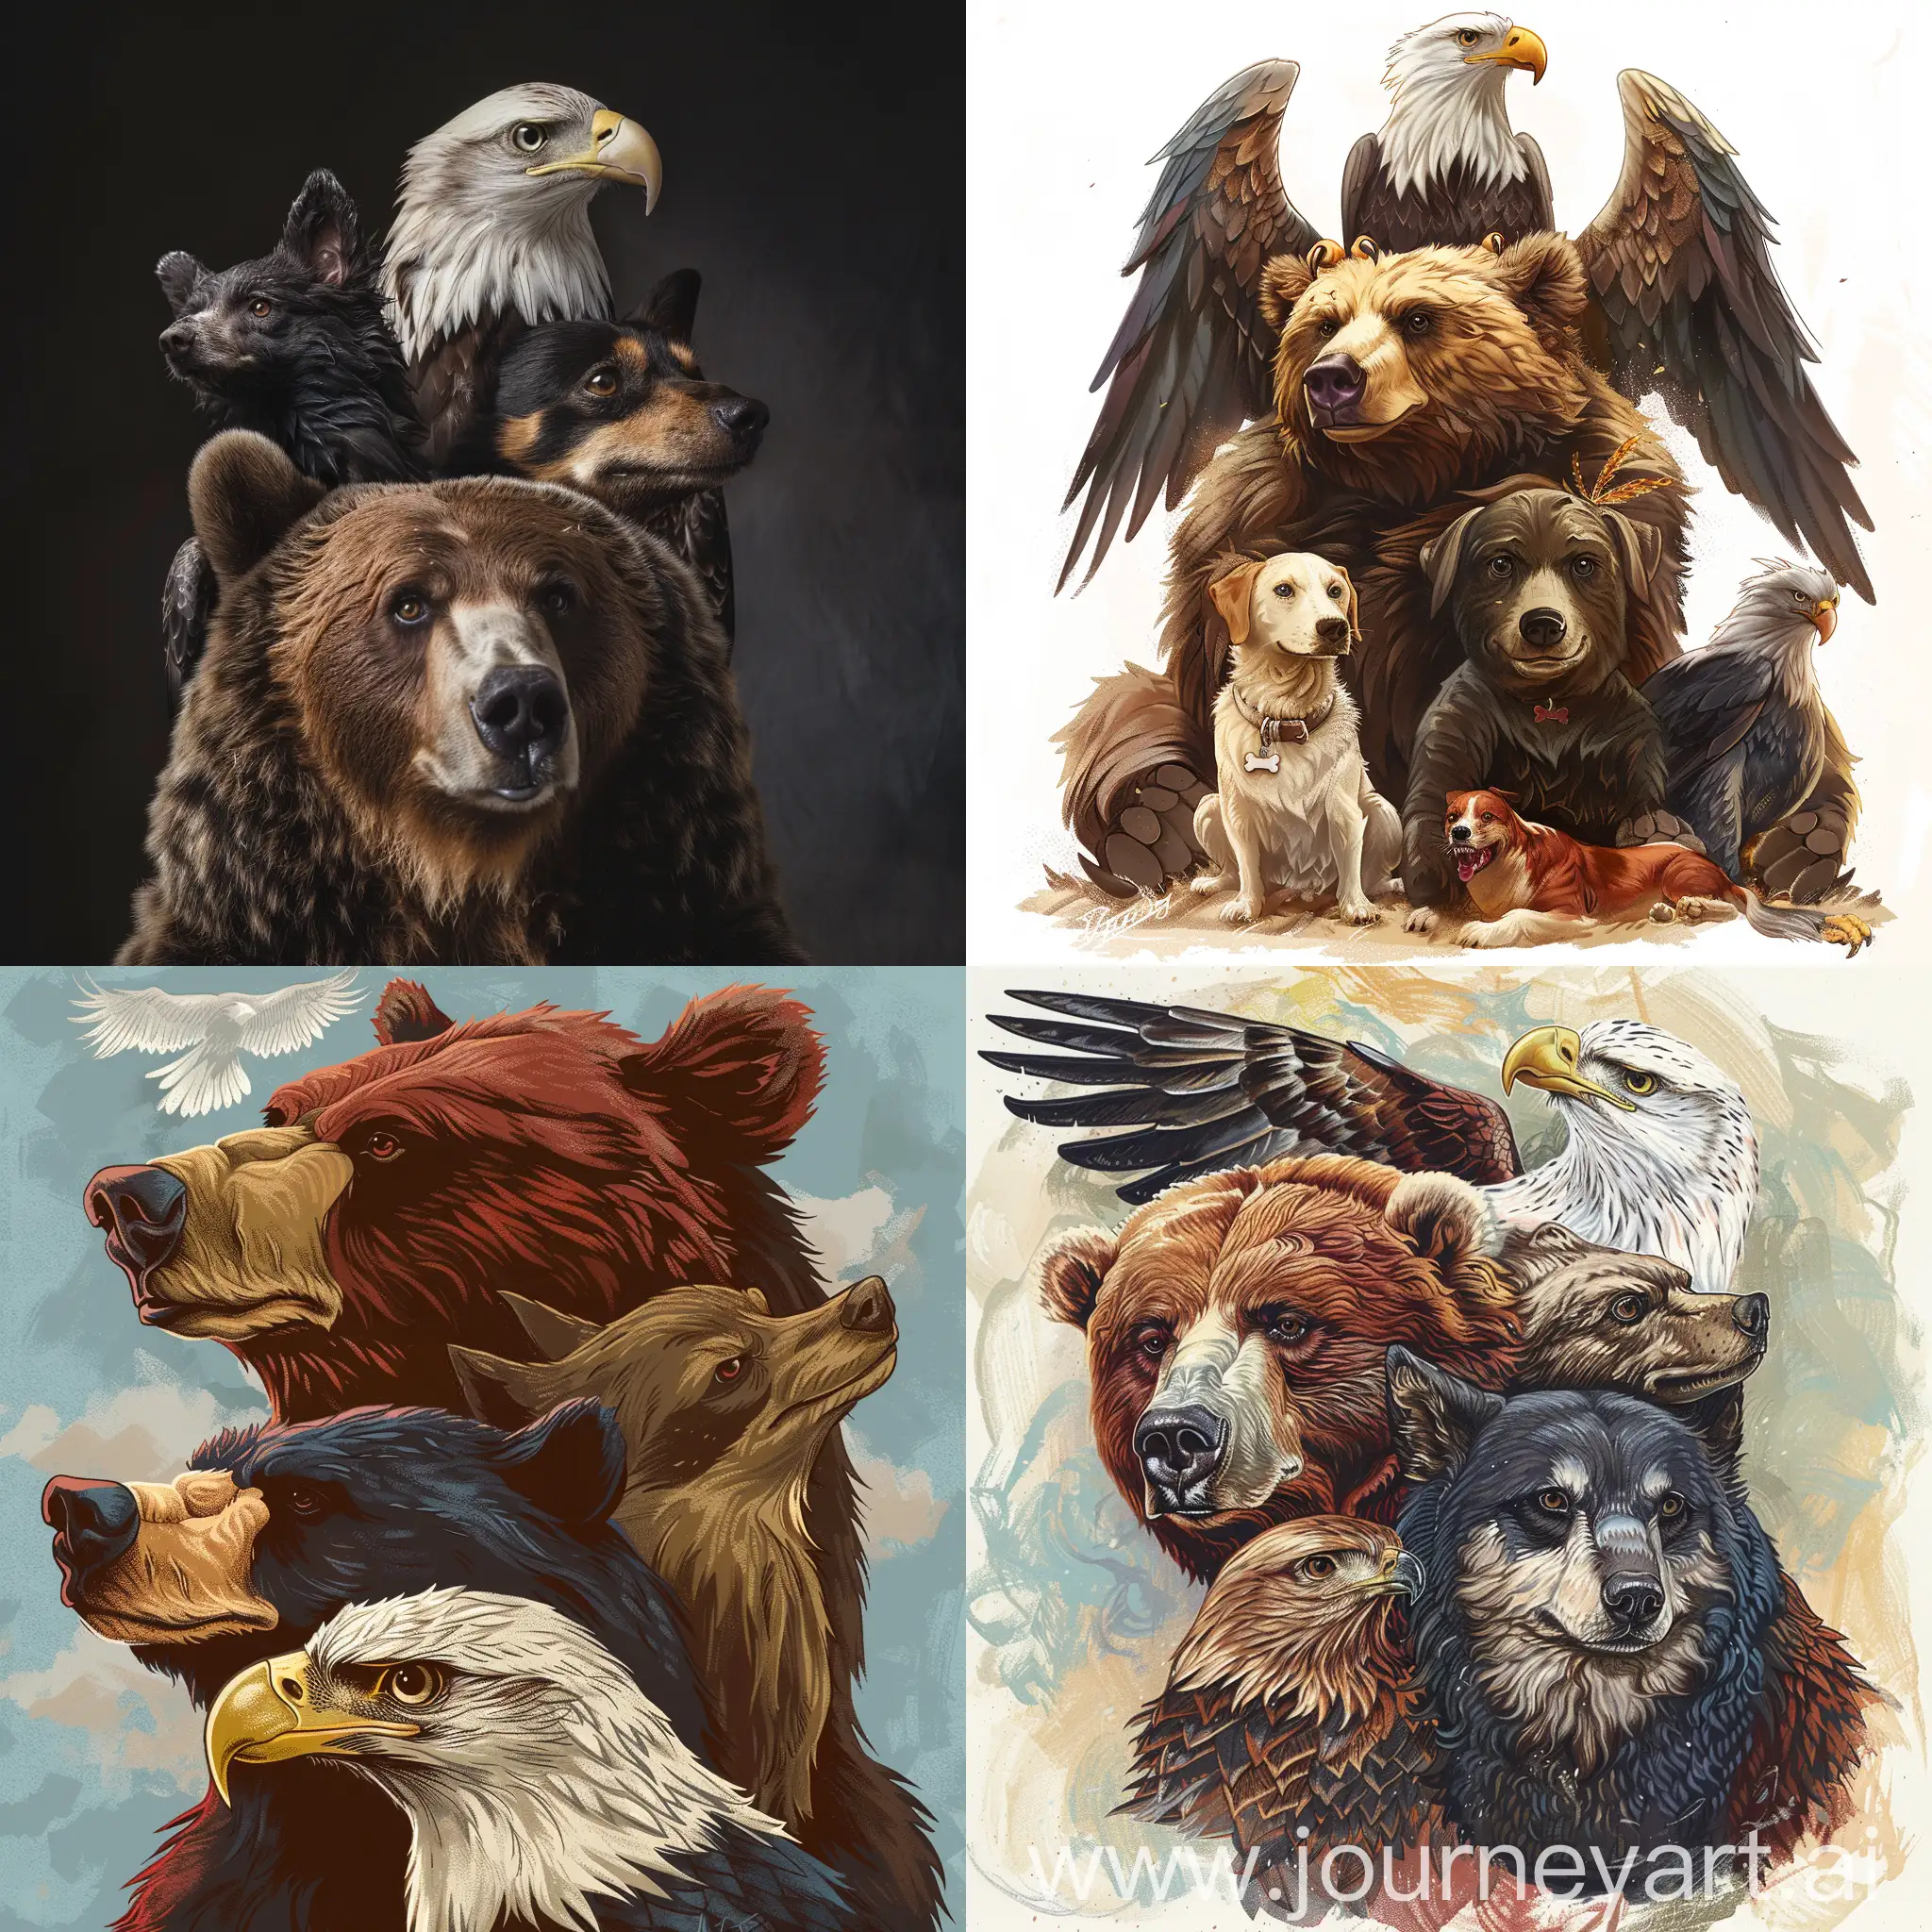 mix a bear, an eagle and a dog